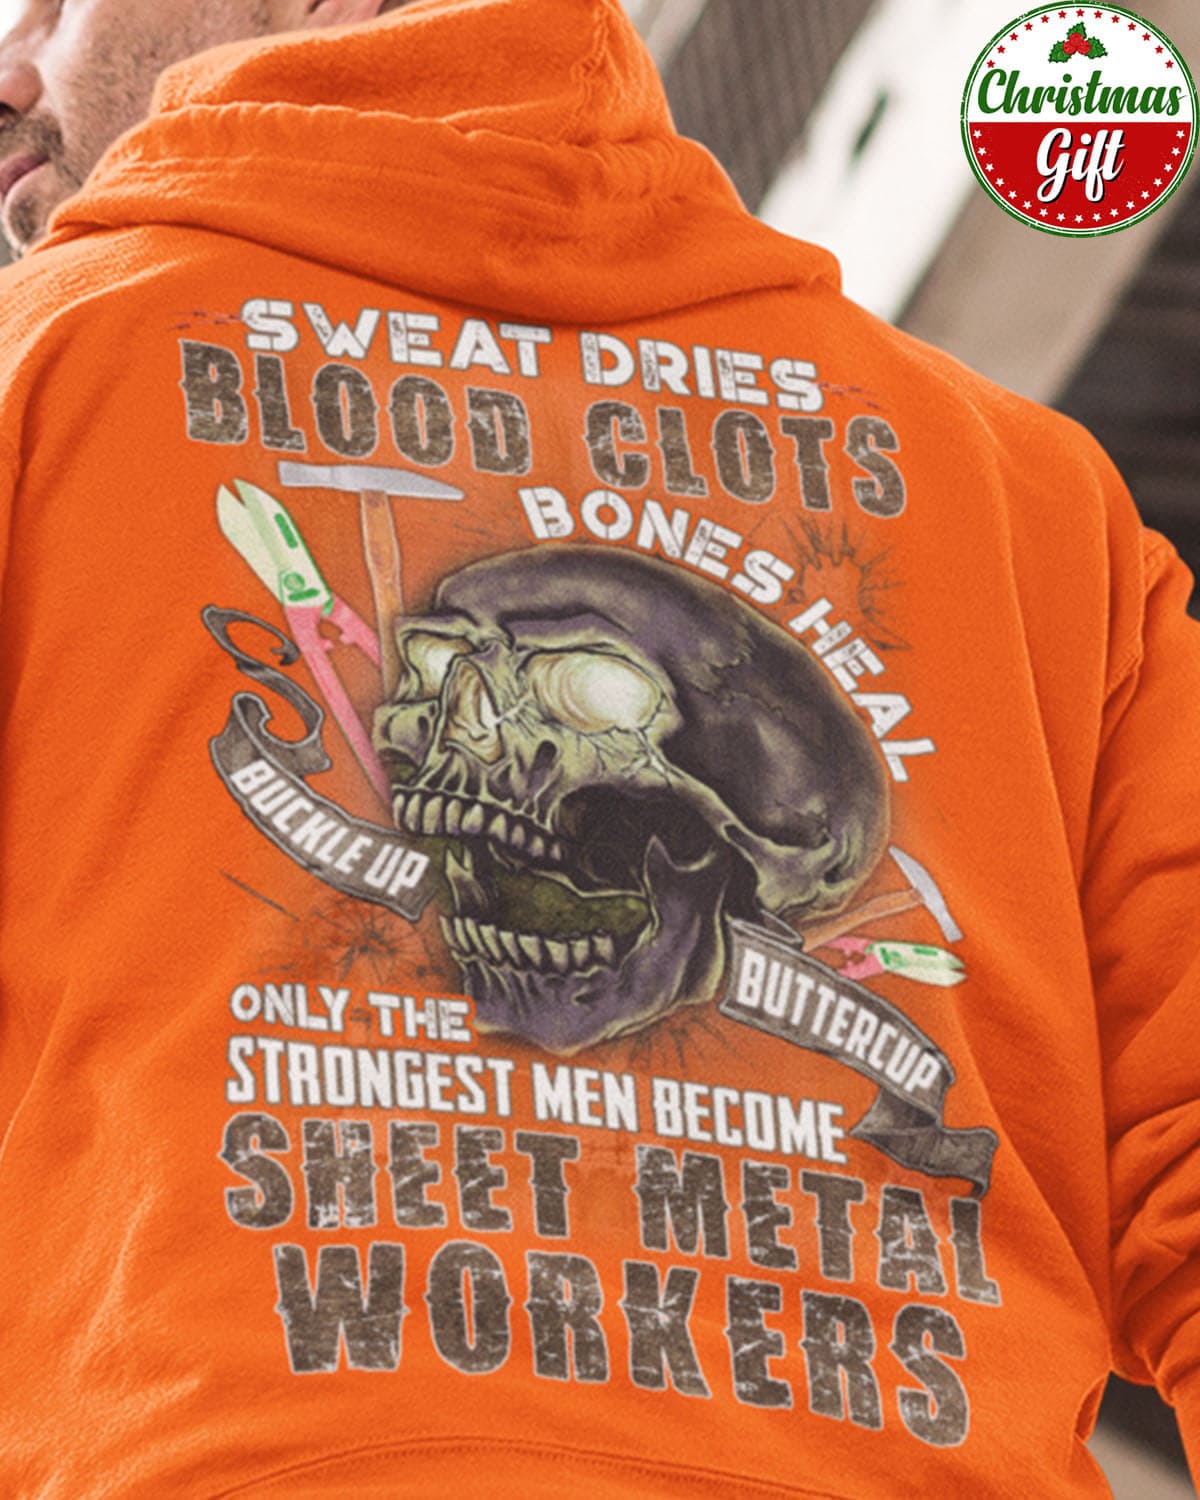 Sweat dries, blood clots, bones heal - Only the strongest men become sheet metal workers, Halloween gift for metal worker